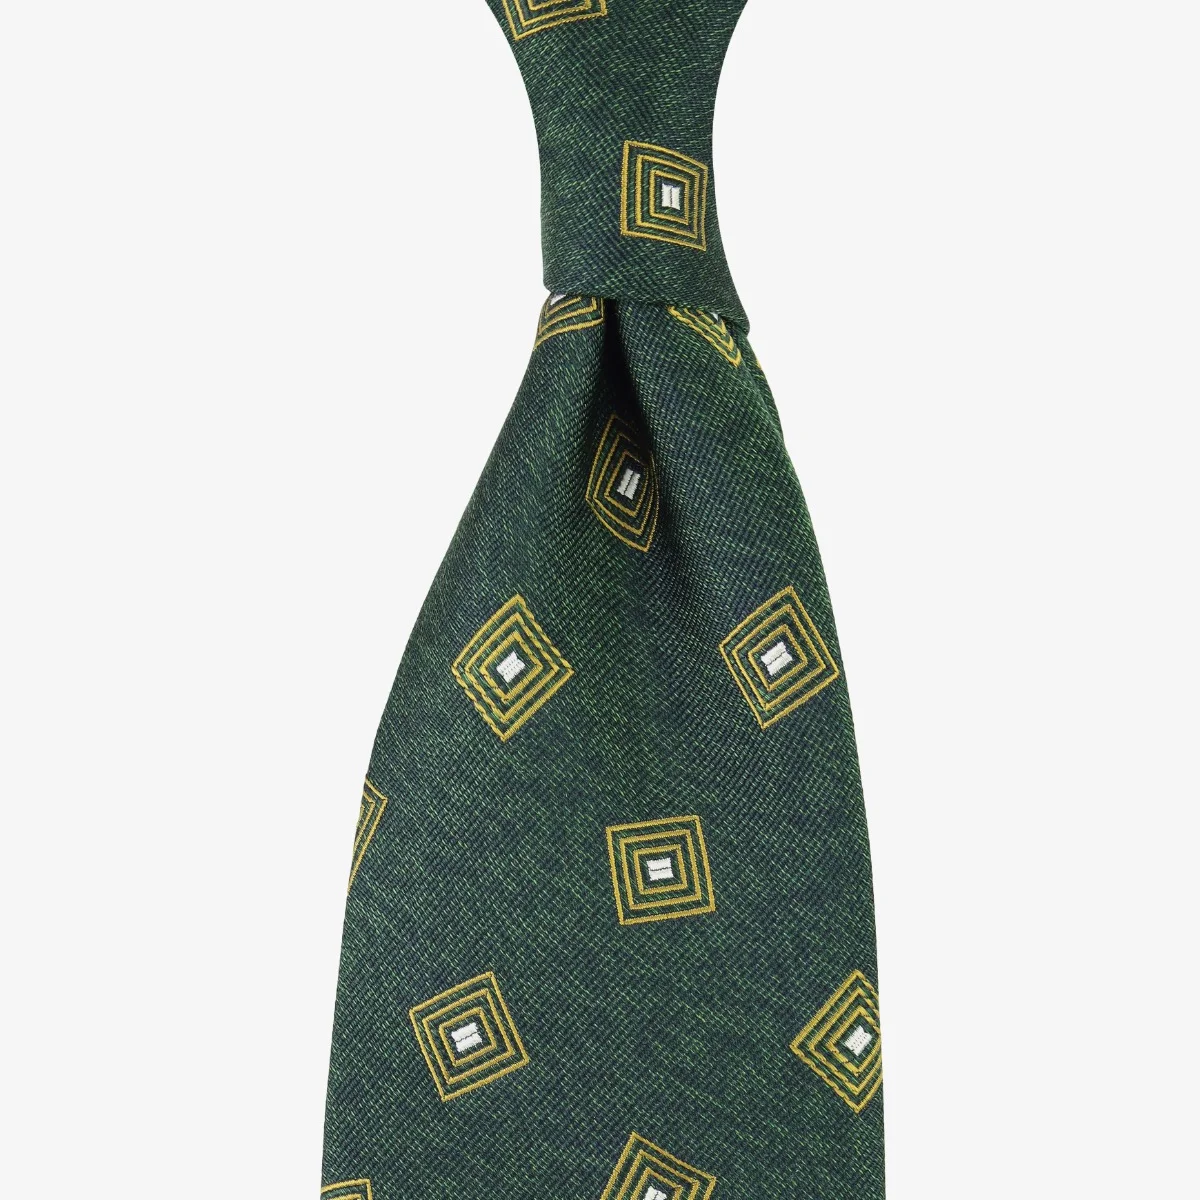 Shibumi Firenze forest green Japanese silk tie with yellow geometric pattern